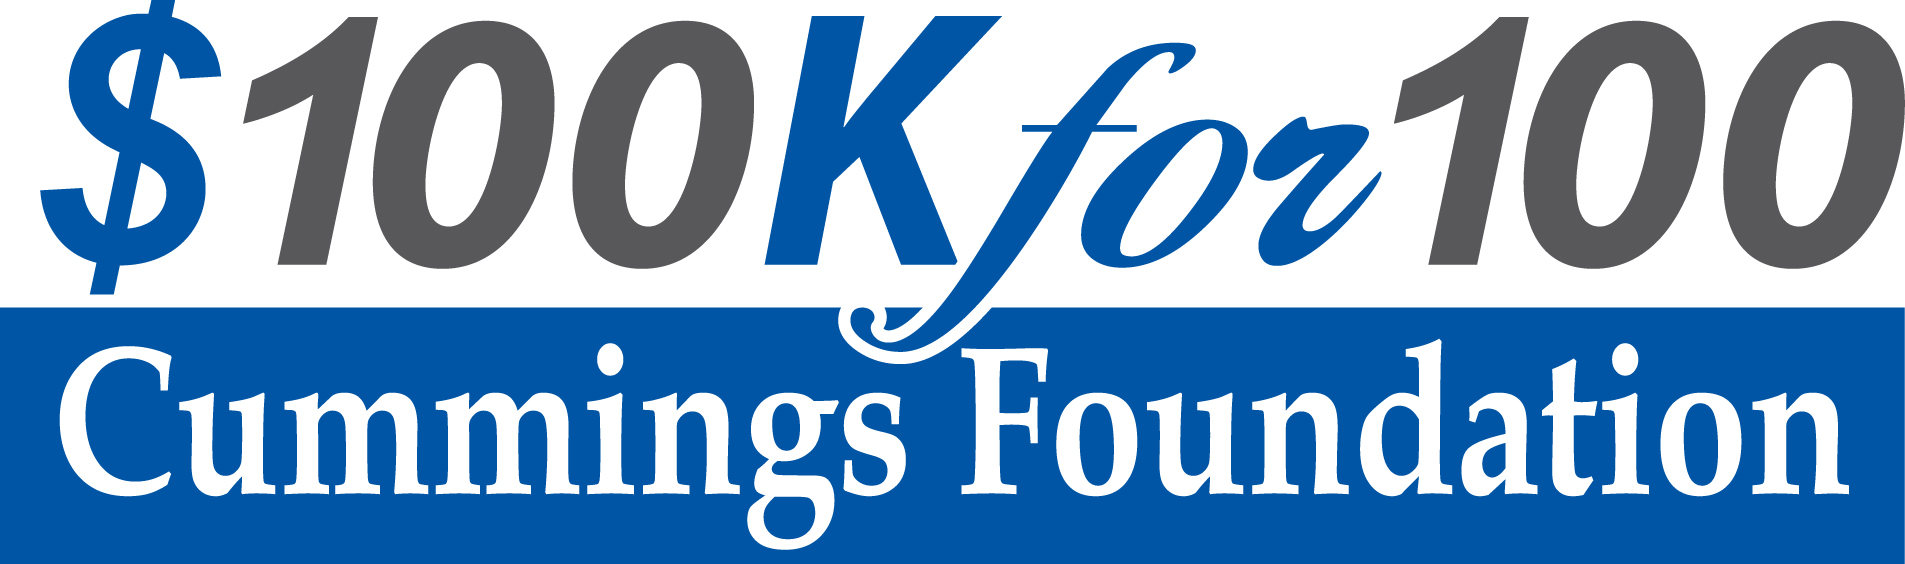 $100L for 100 Cummings Foundation Logo